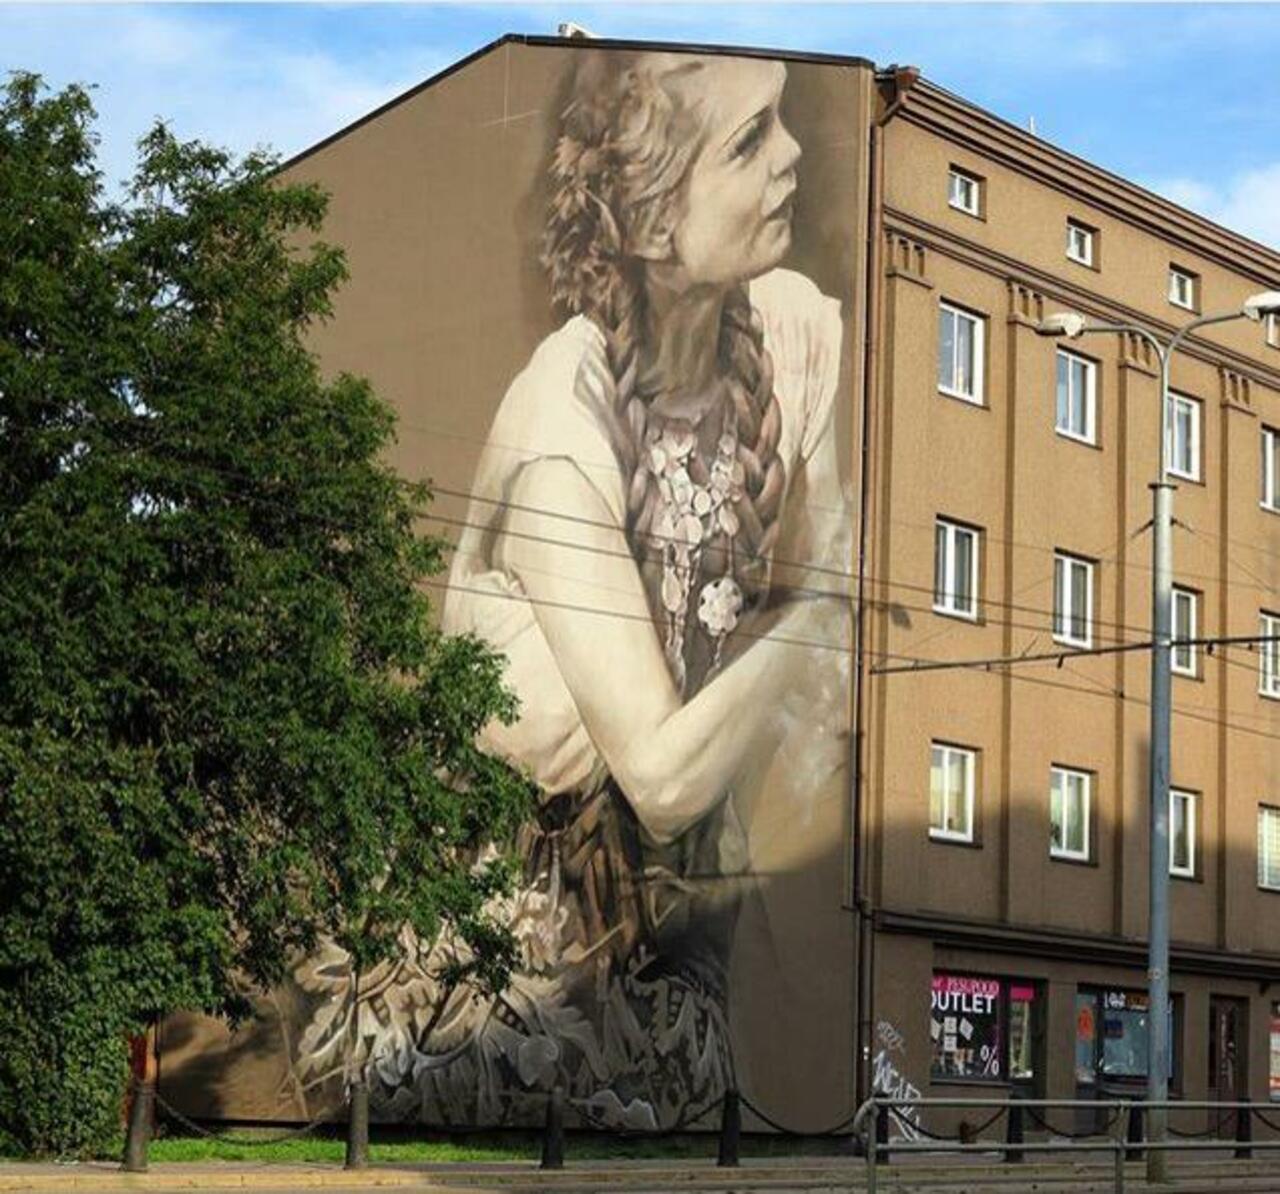 Just completed Street Art from Guido Van Helten in Tallinn, Estonia 

#art #mural #graffiti #streetart http://t.co/6ZBFqxeLGK